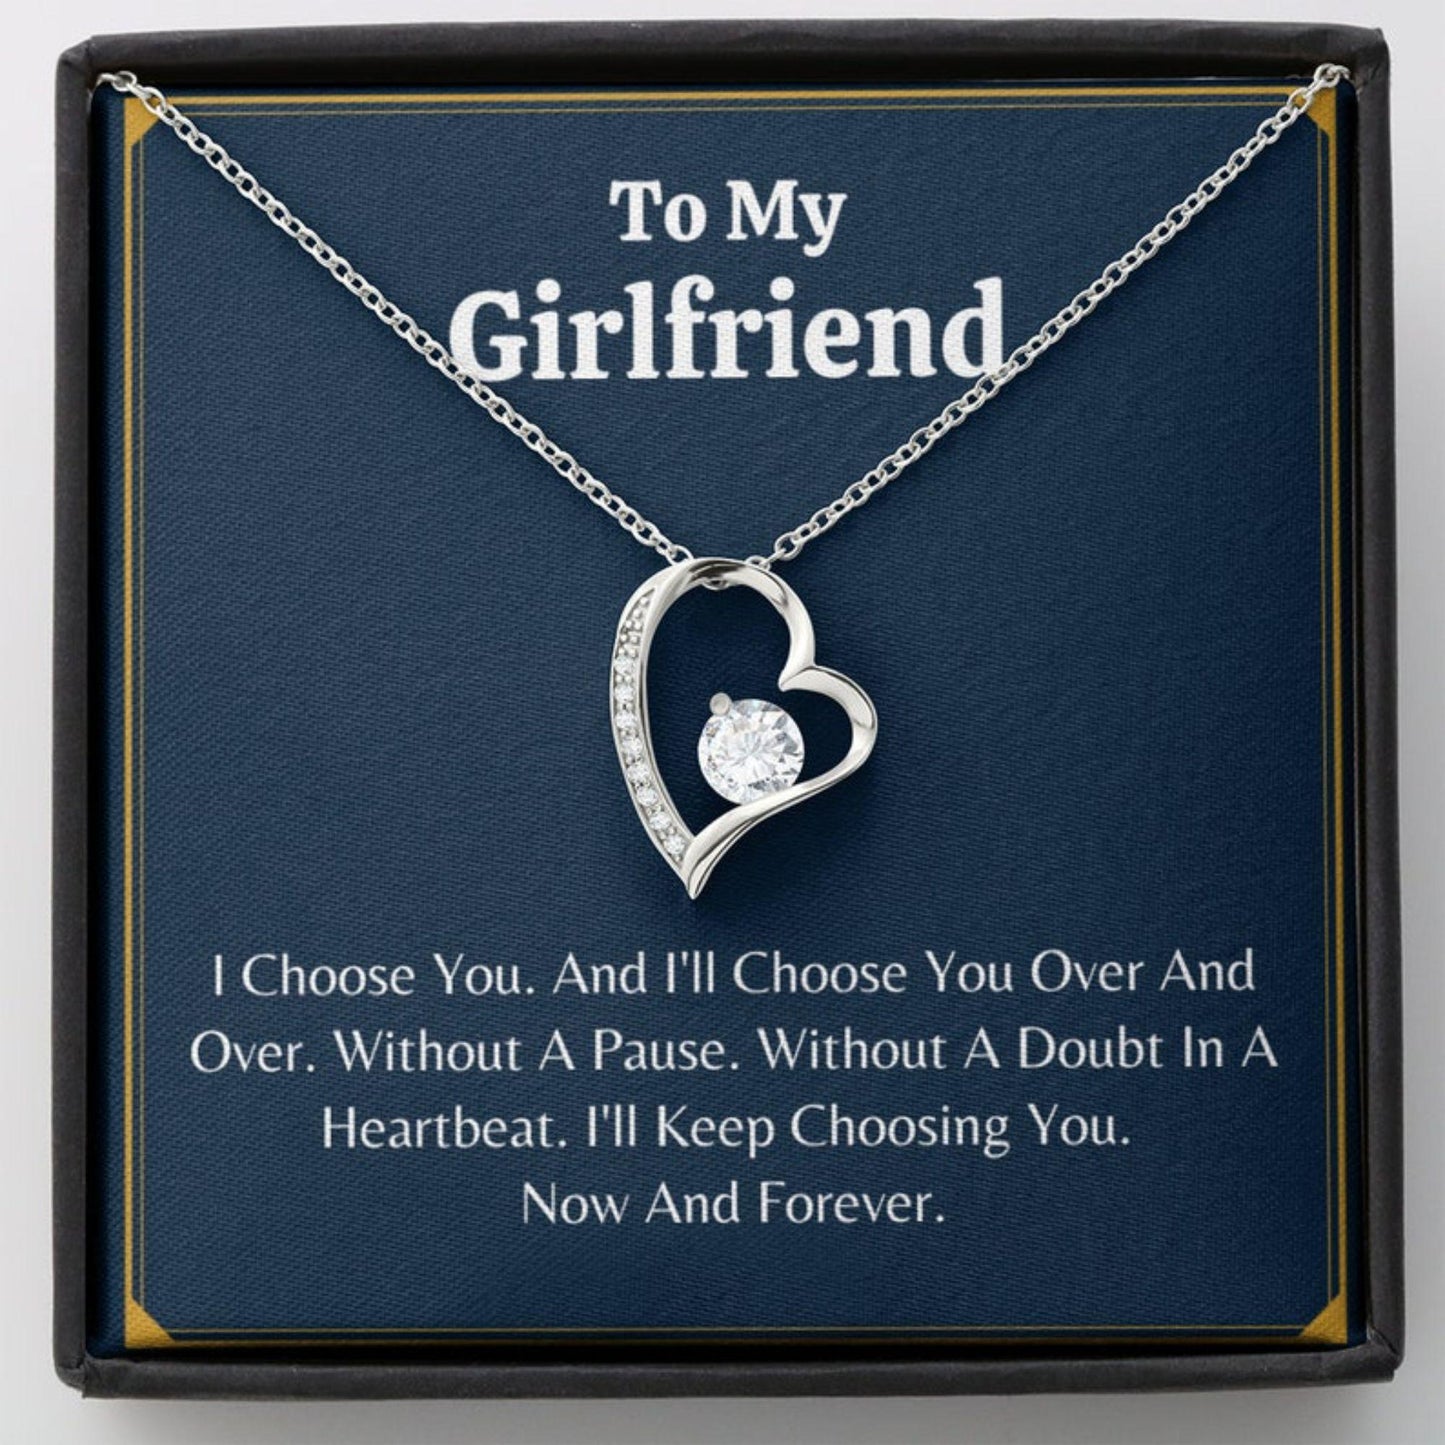 Girlfriend Necklace, To My Girlfriend Necklace, Girlfriend Anniversary, Girlfriend Valentine's Day Necklace Gift From Boyfriend